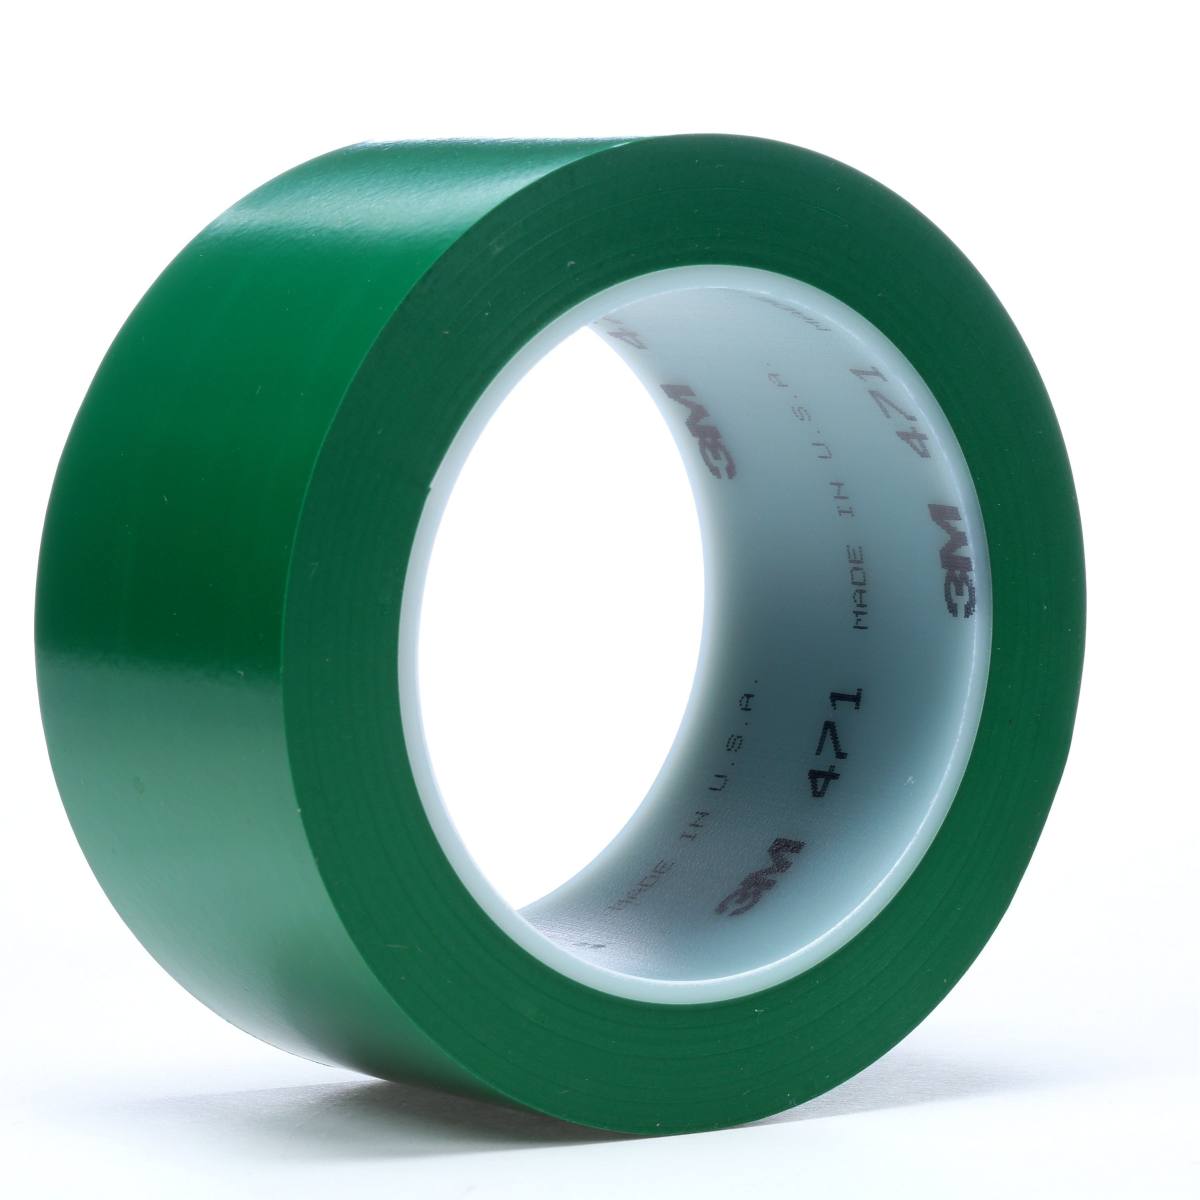 3M ruban adhésif en PVC souple 471 F, vert, 9 mm x 33 m, 0,13 mm